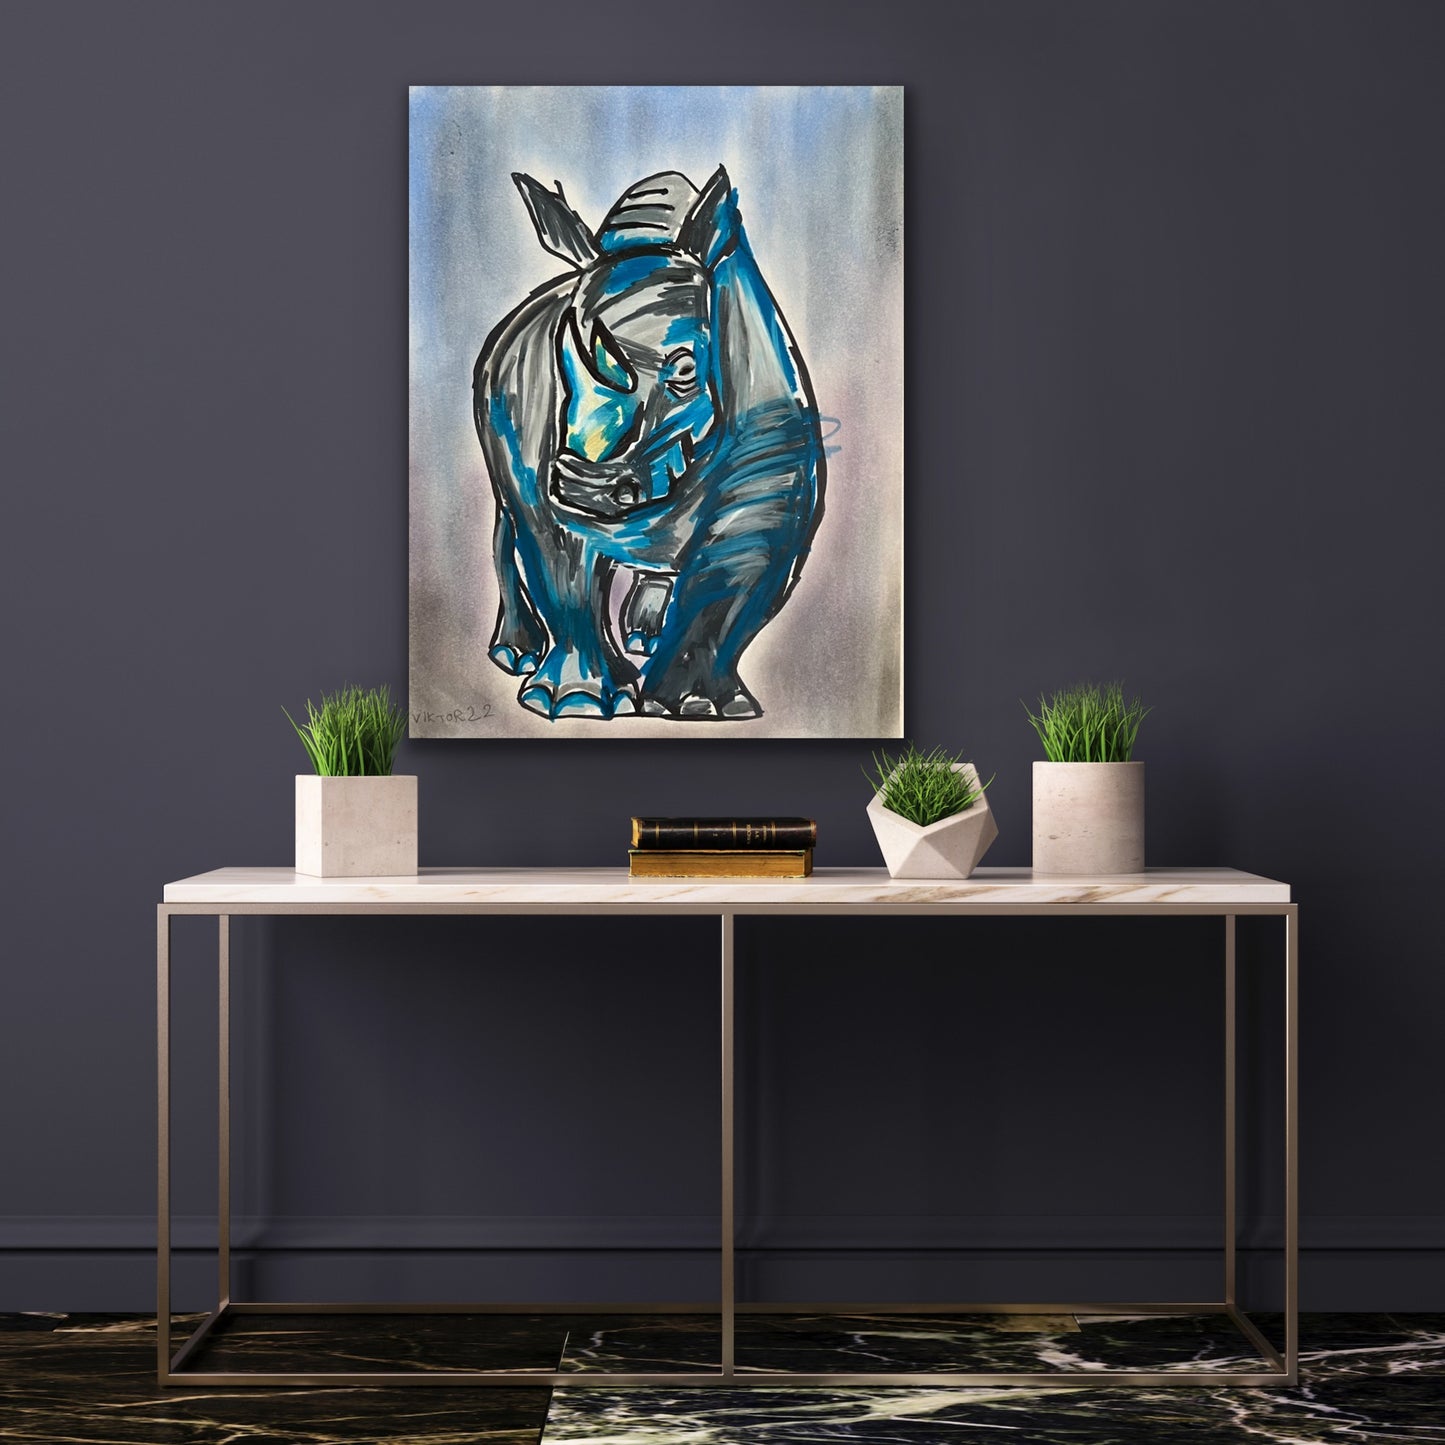 Rhino - fine prints of original artwork